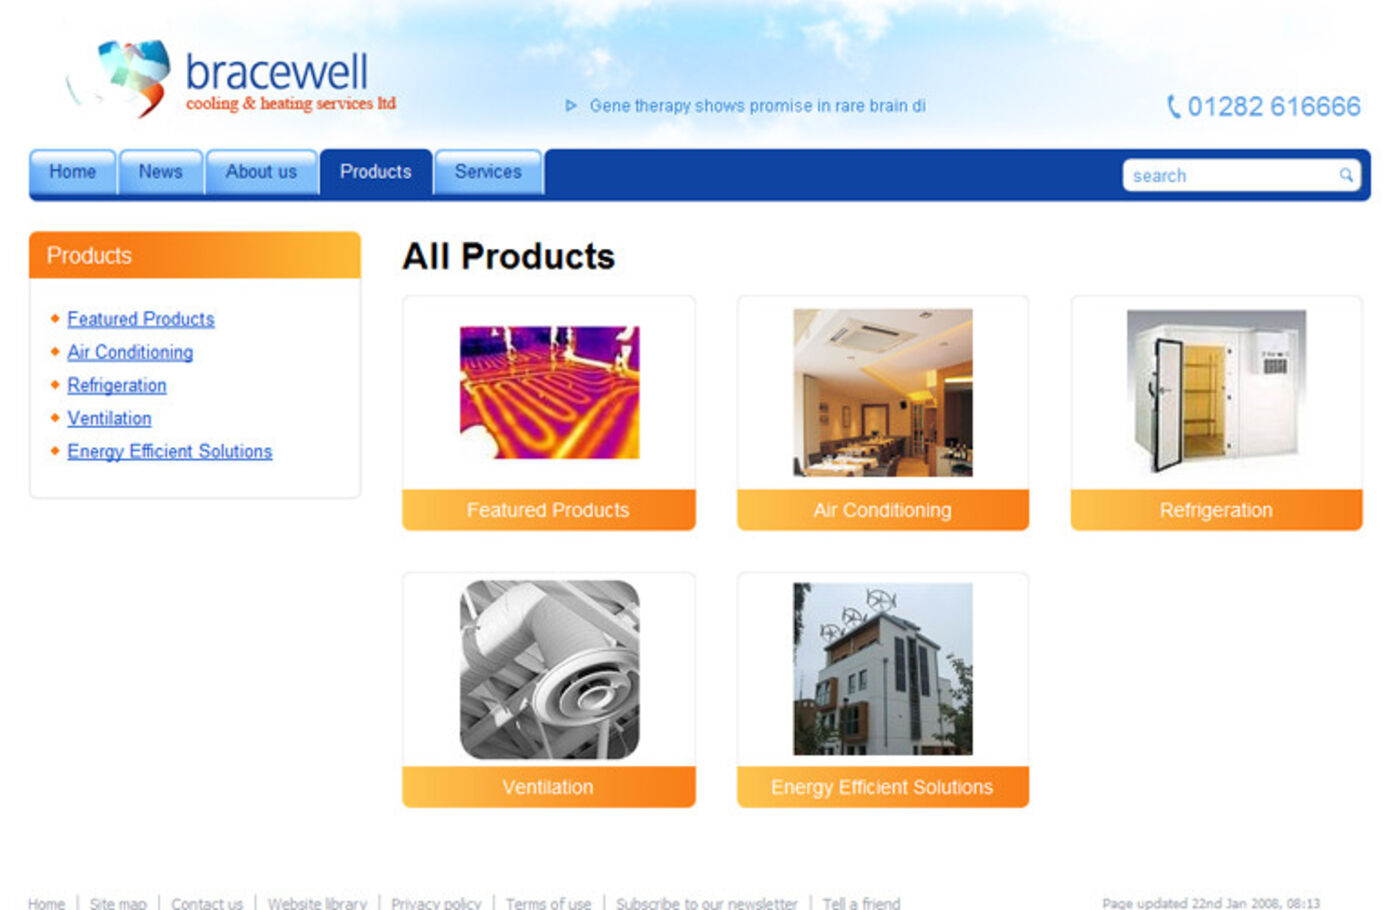 Bracewells Products